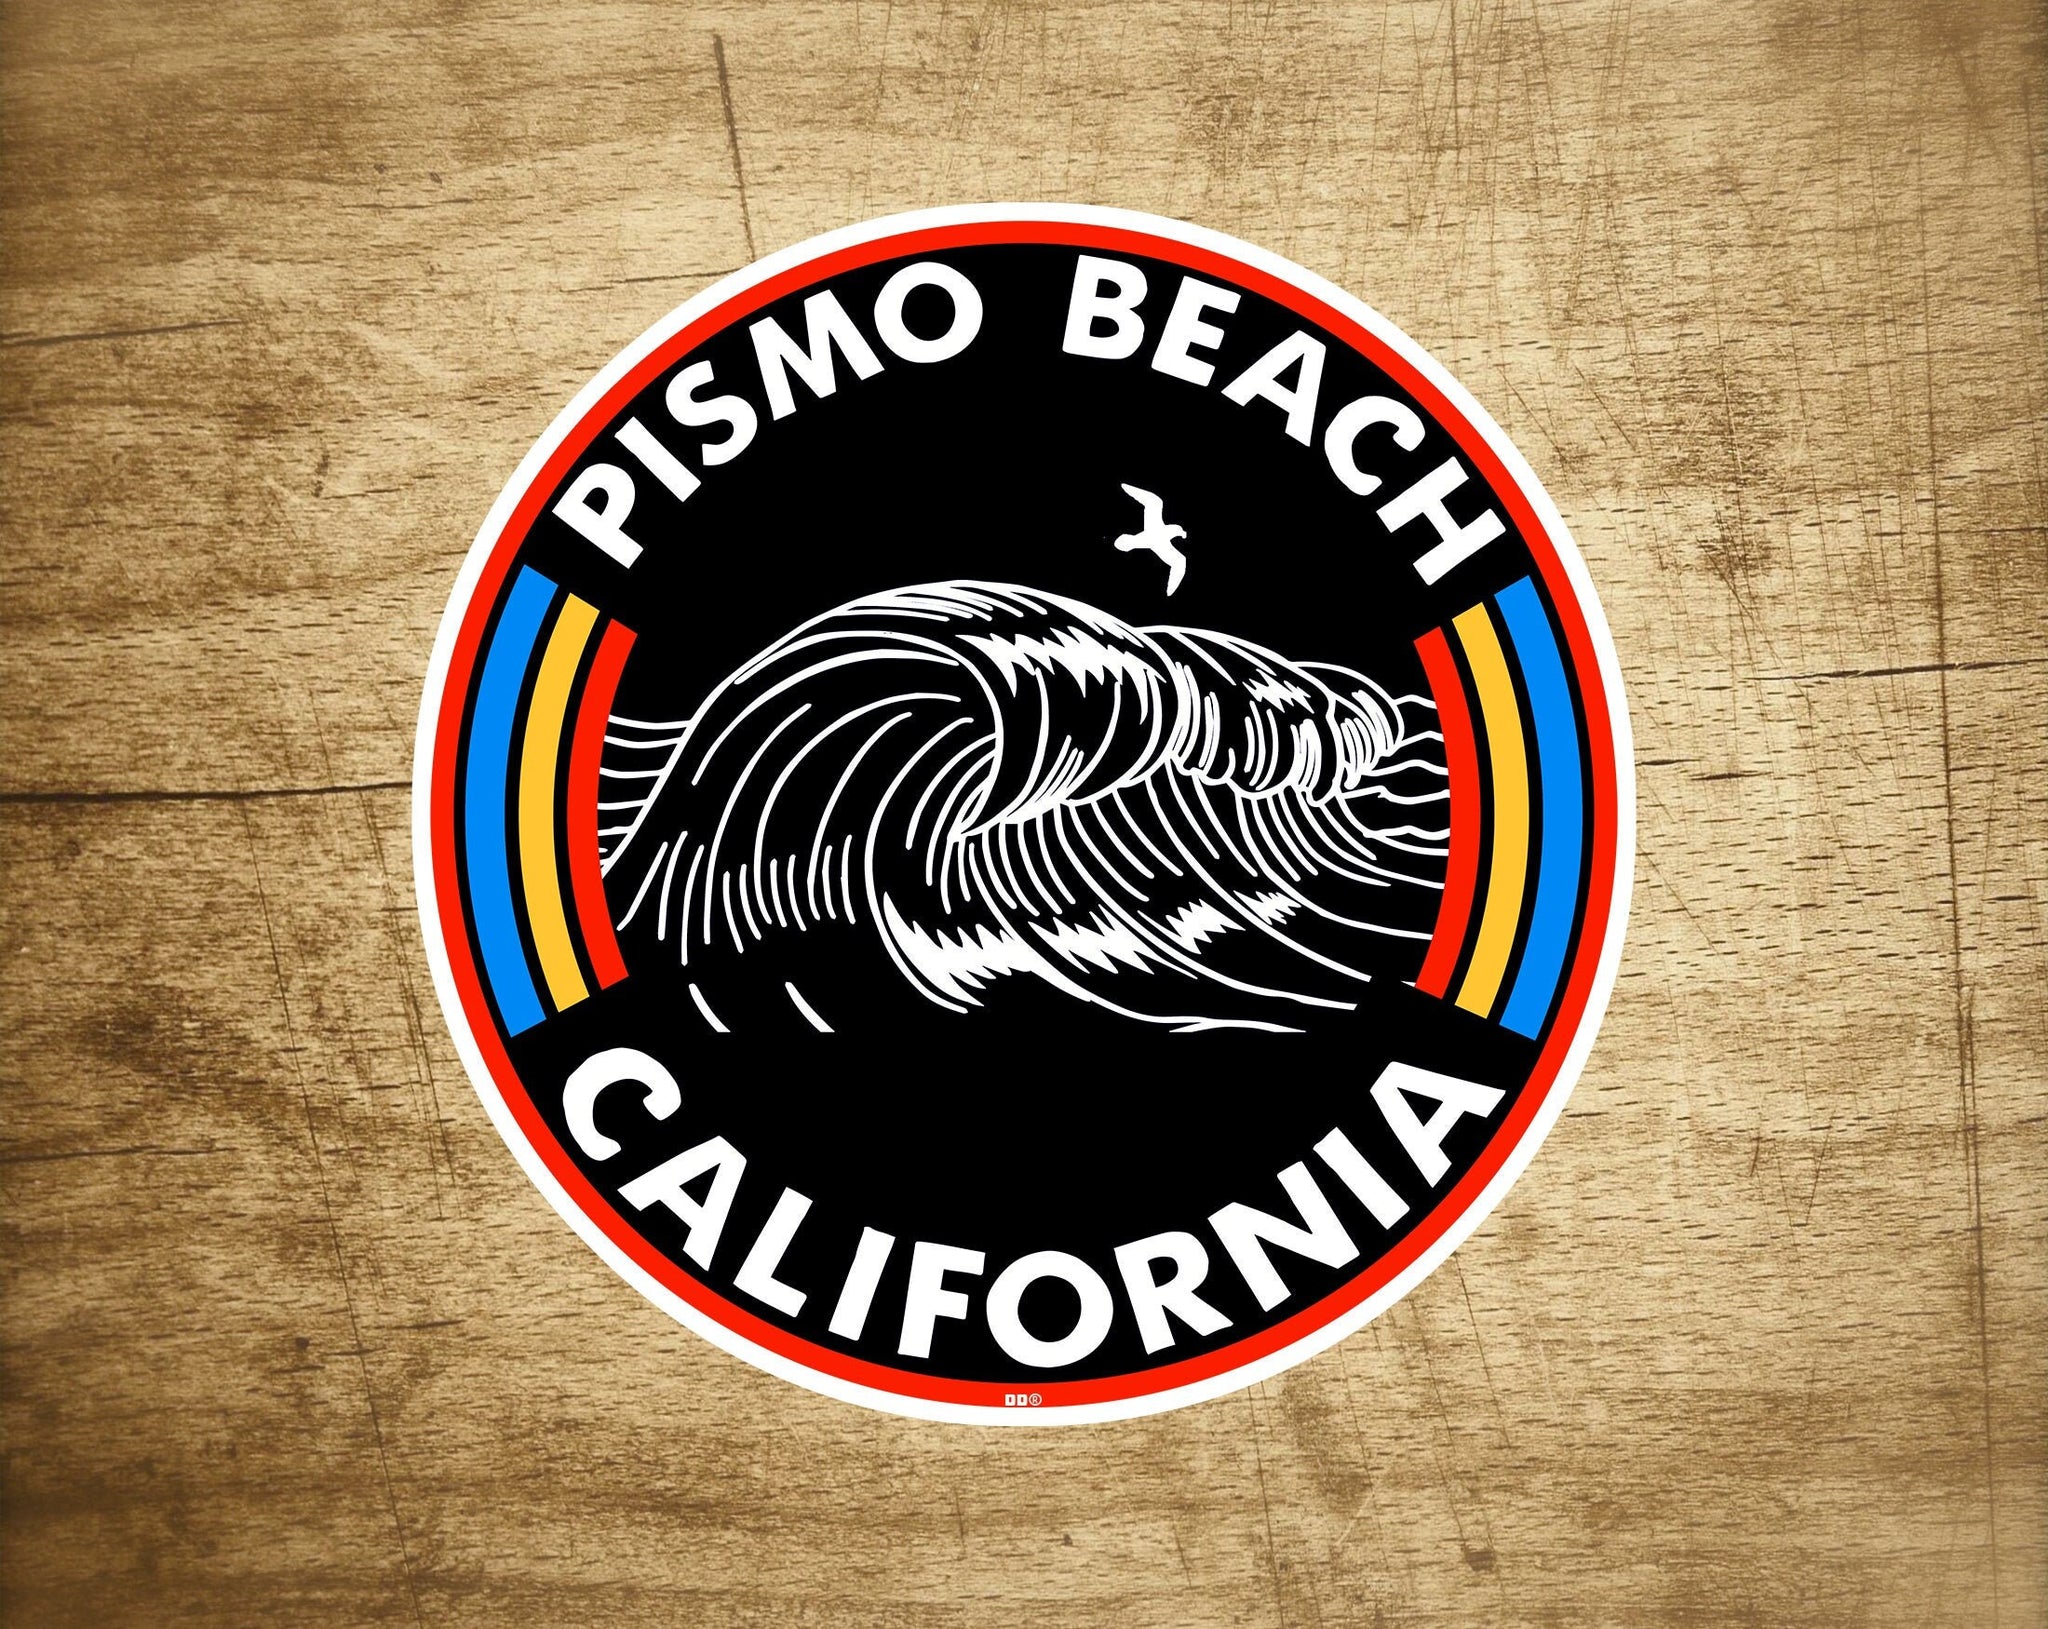 3" Pismo Beach California Decal Sticker Palm Trees Vinyl